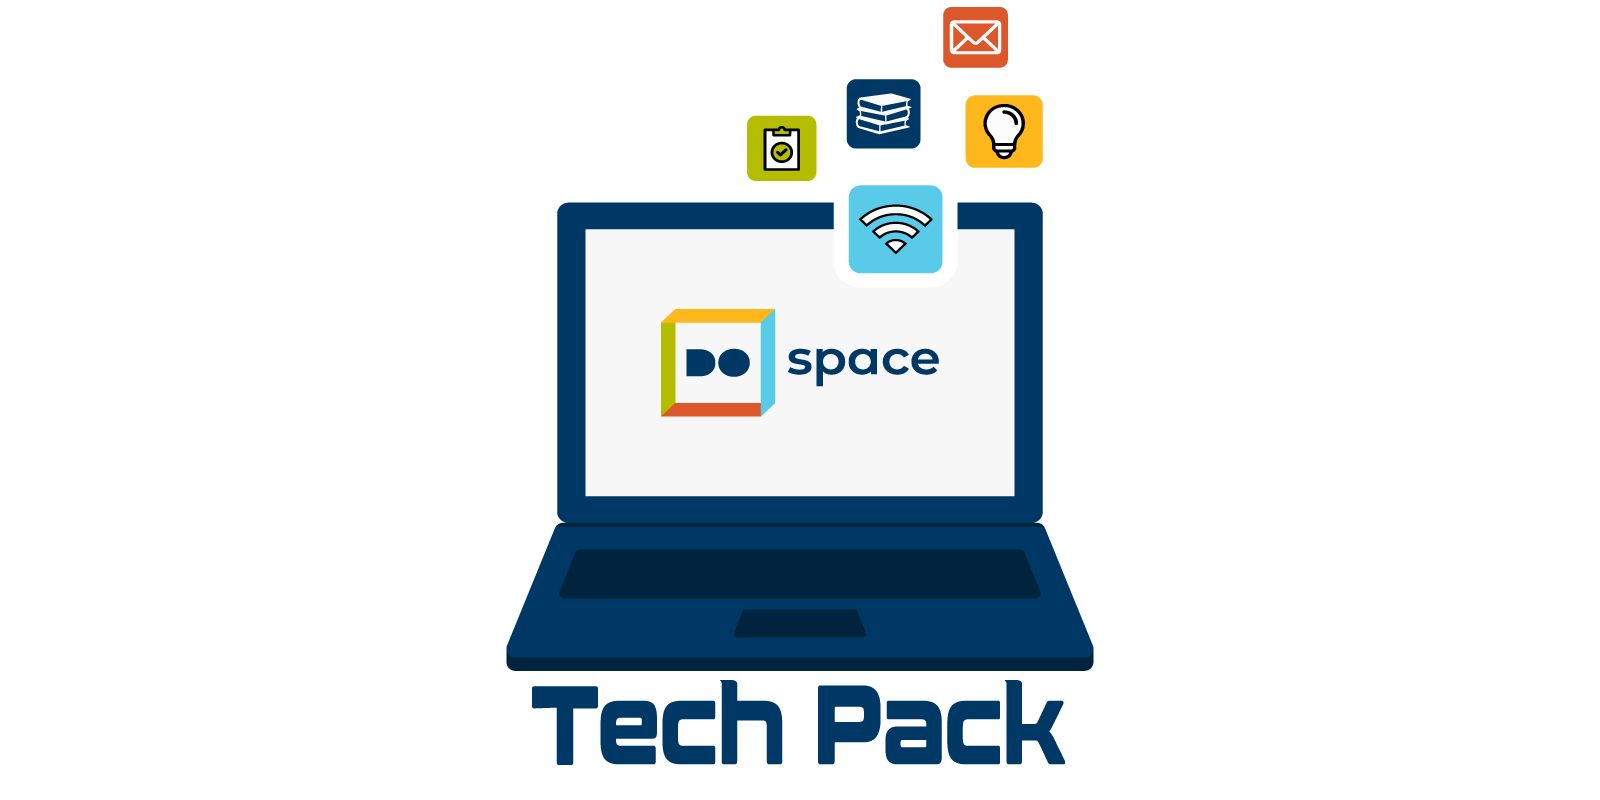 Do Space Tech Pack Program